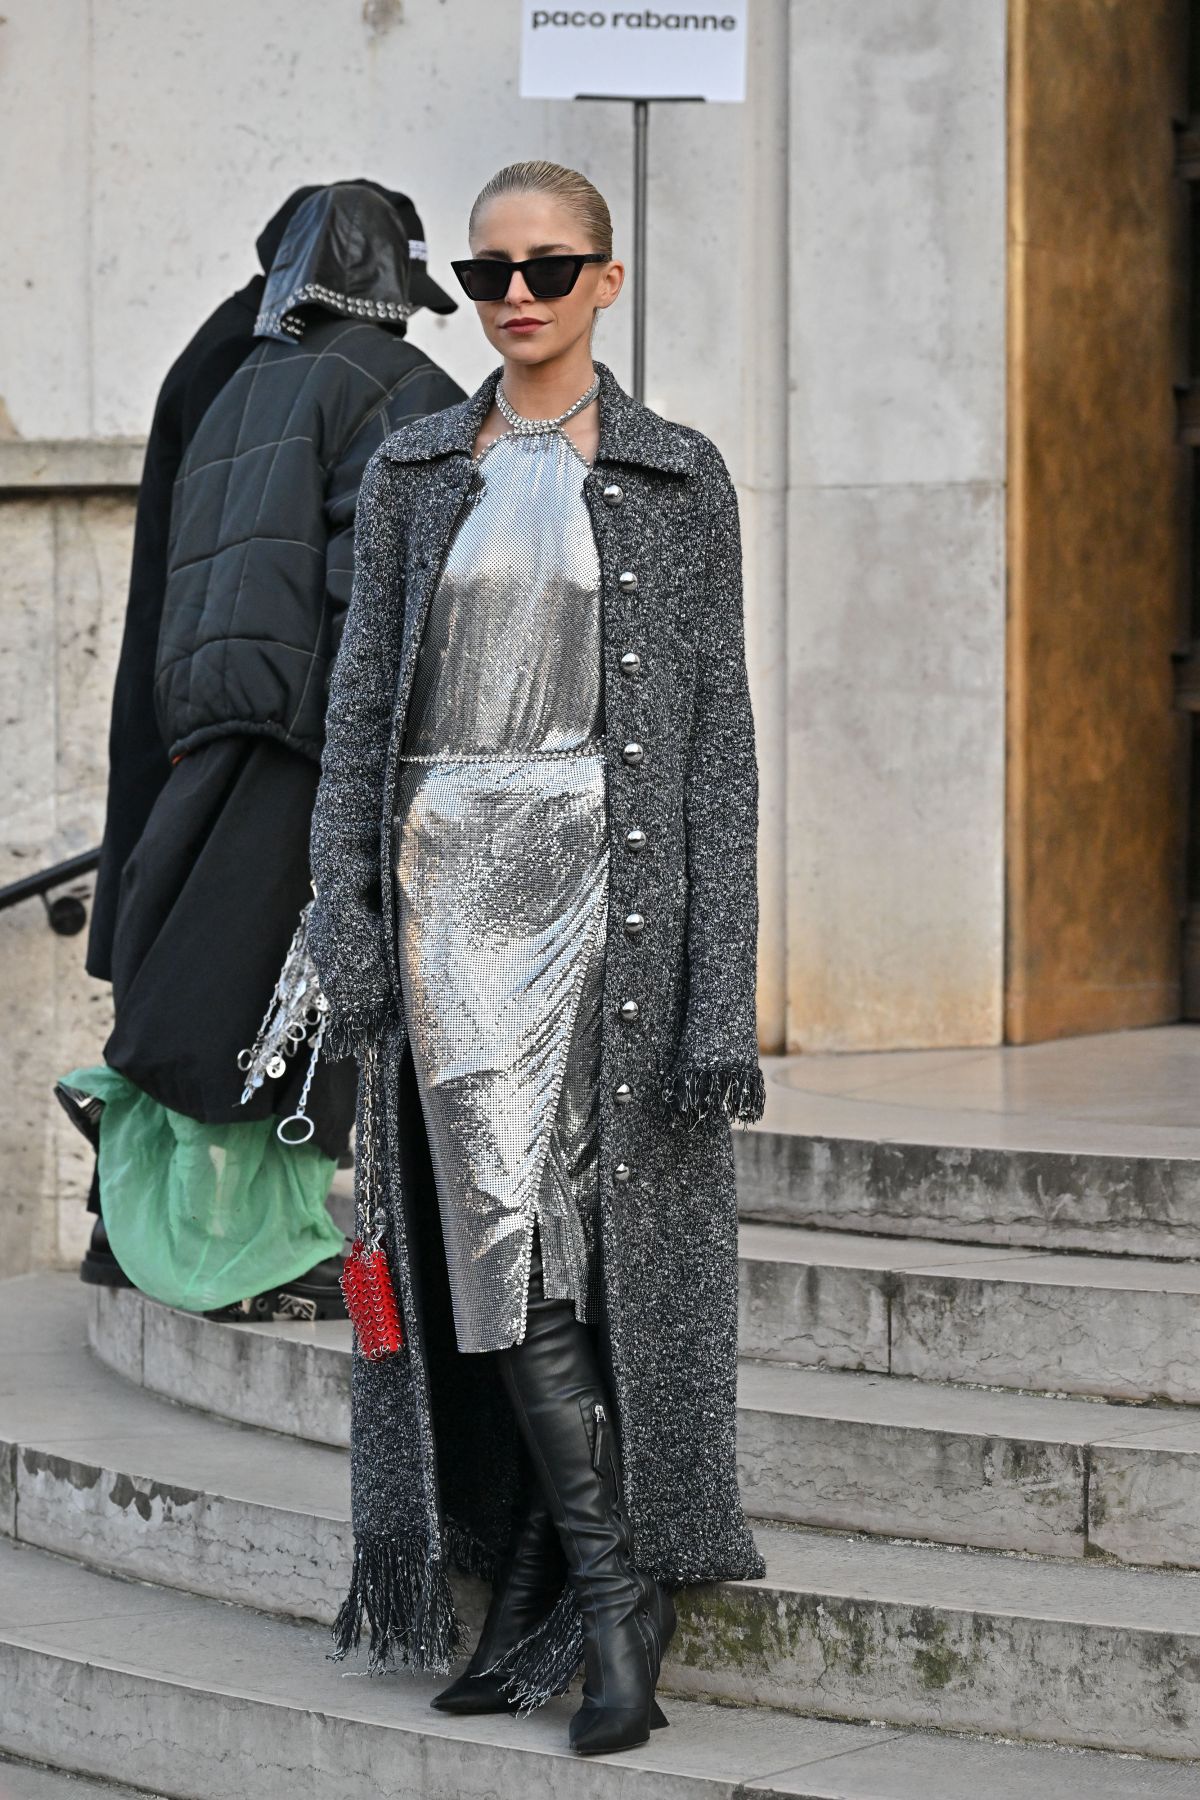 CAROLINE DAUR Arrives at Paco Rabanne Fashion Show in Paris 03/01/2023 ...